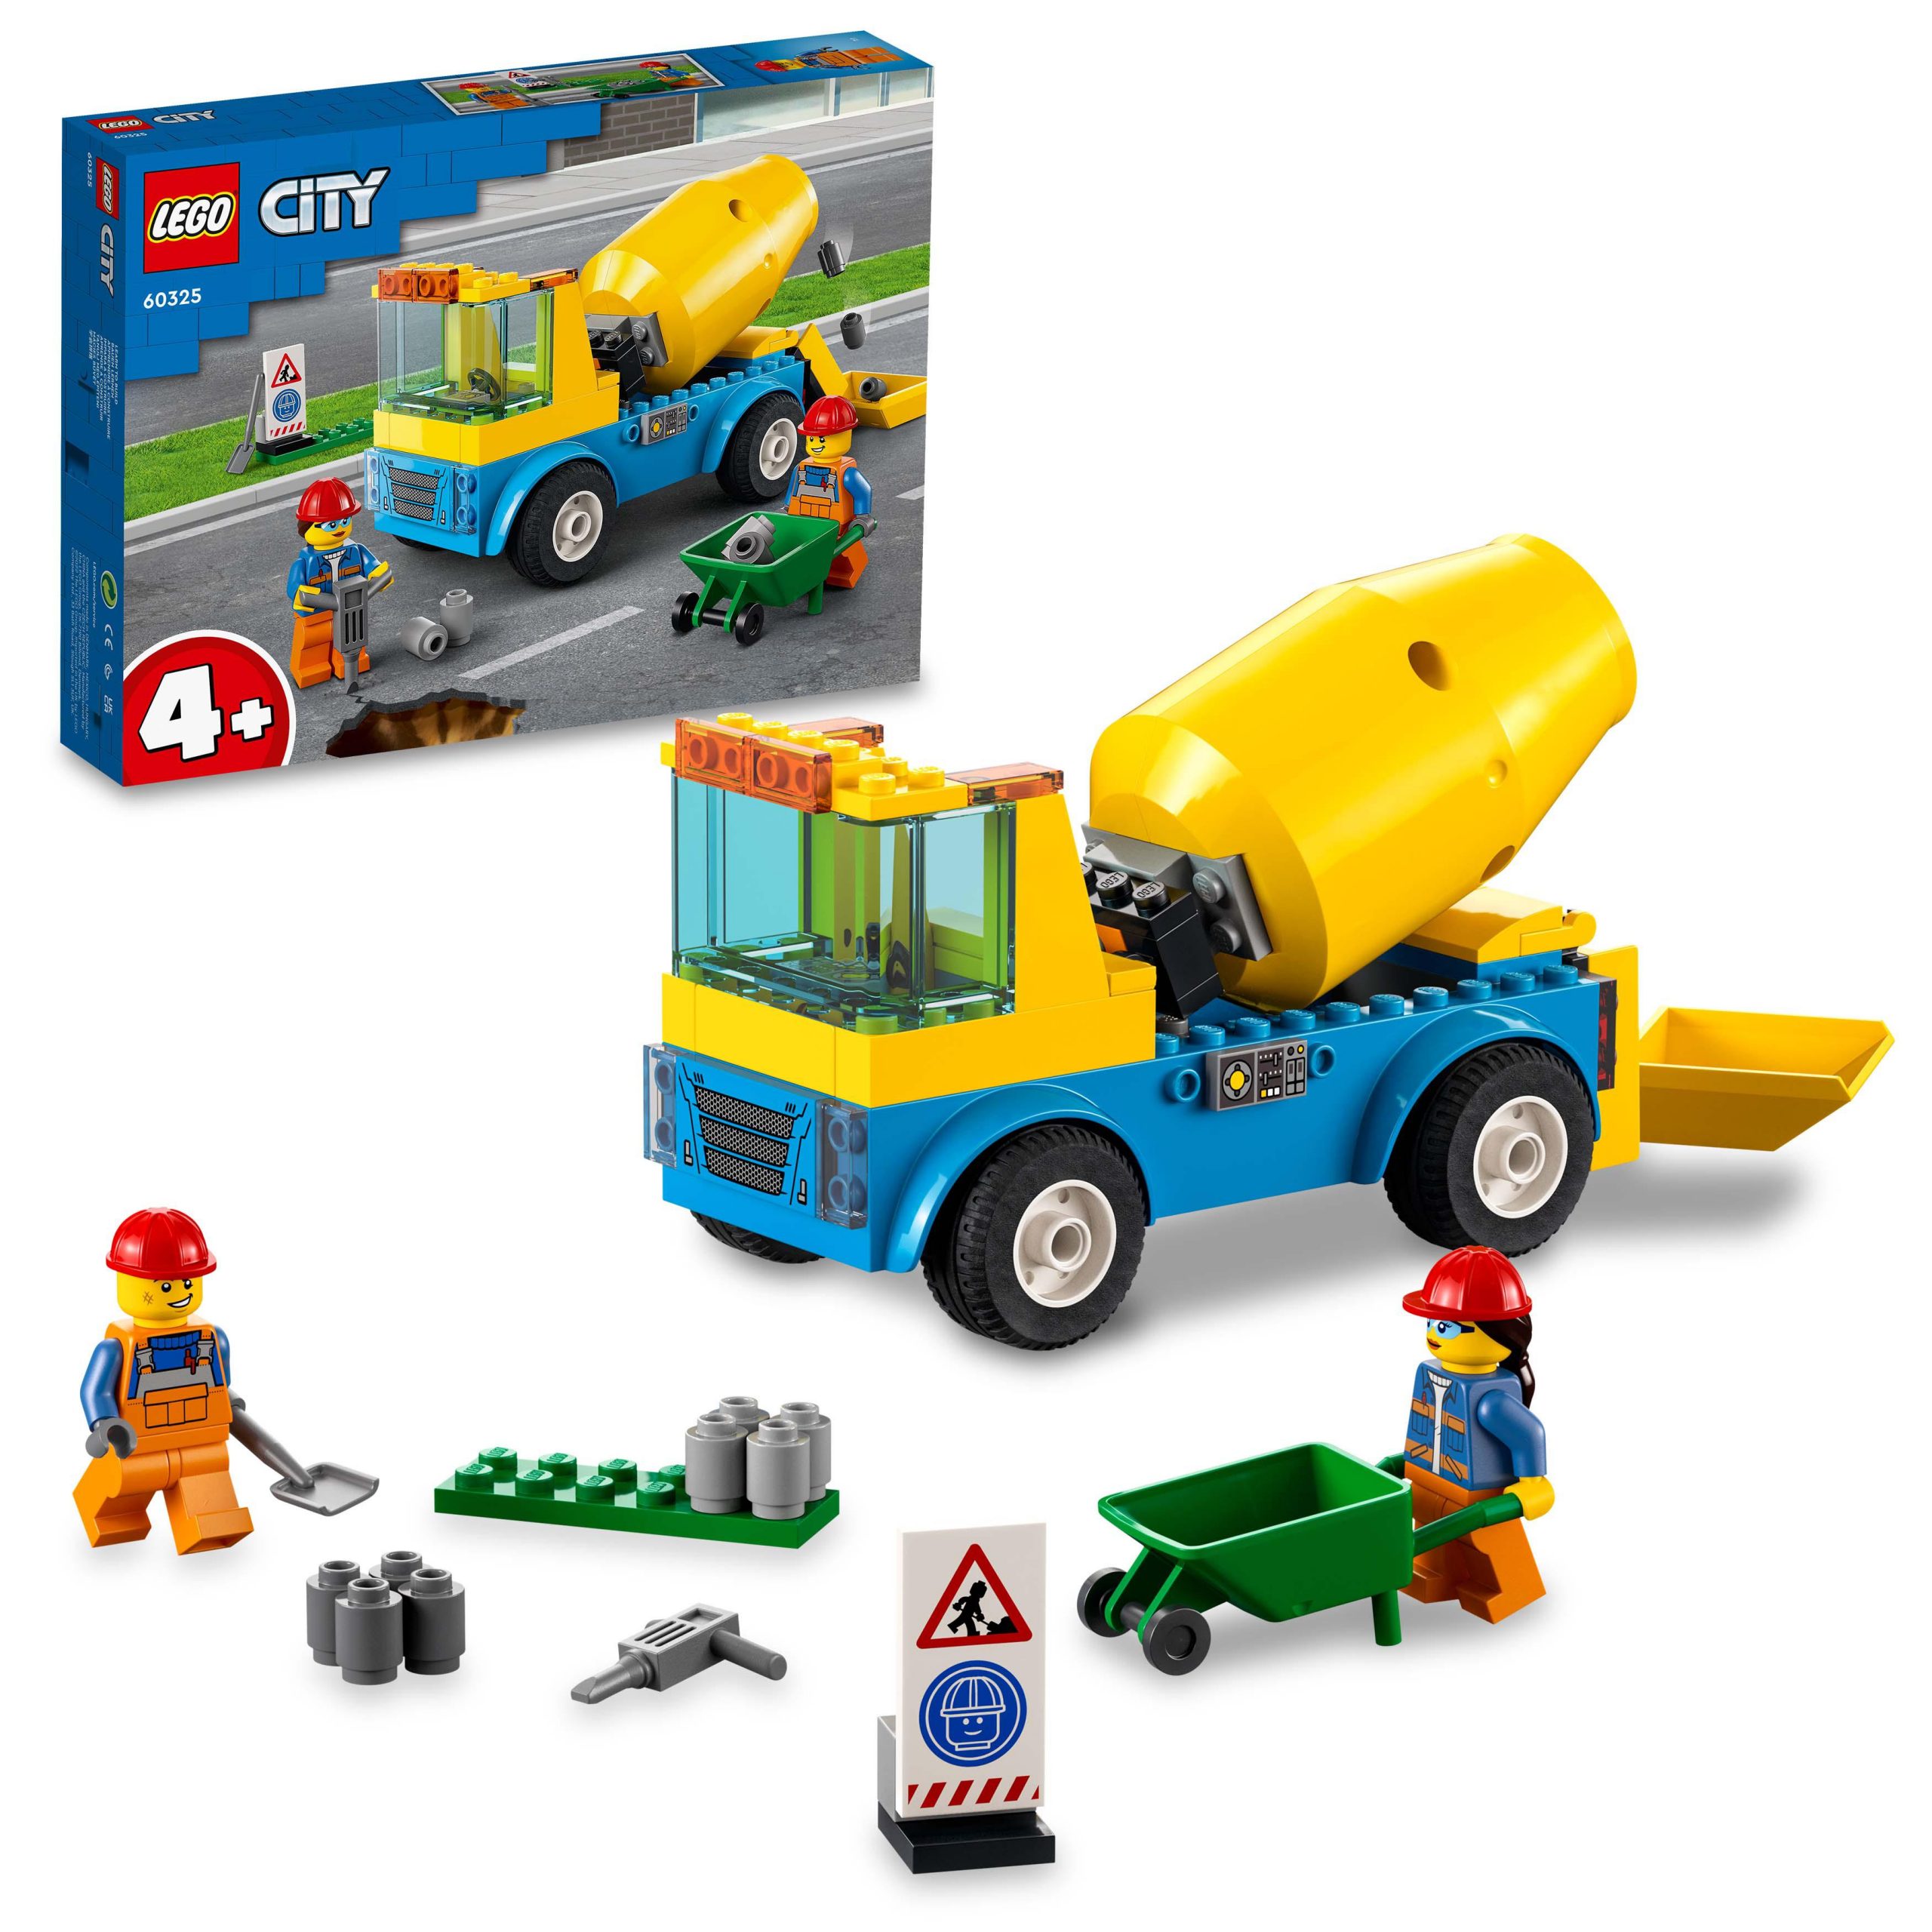 Lego city great vehicles autobetoniera, camion giocattolo, giochi